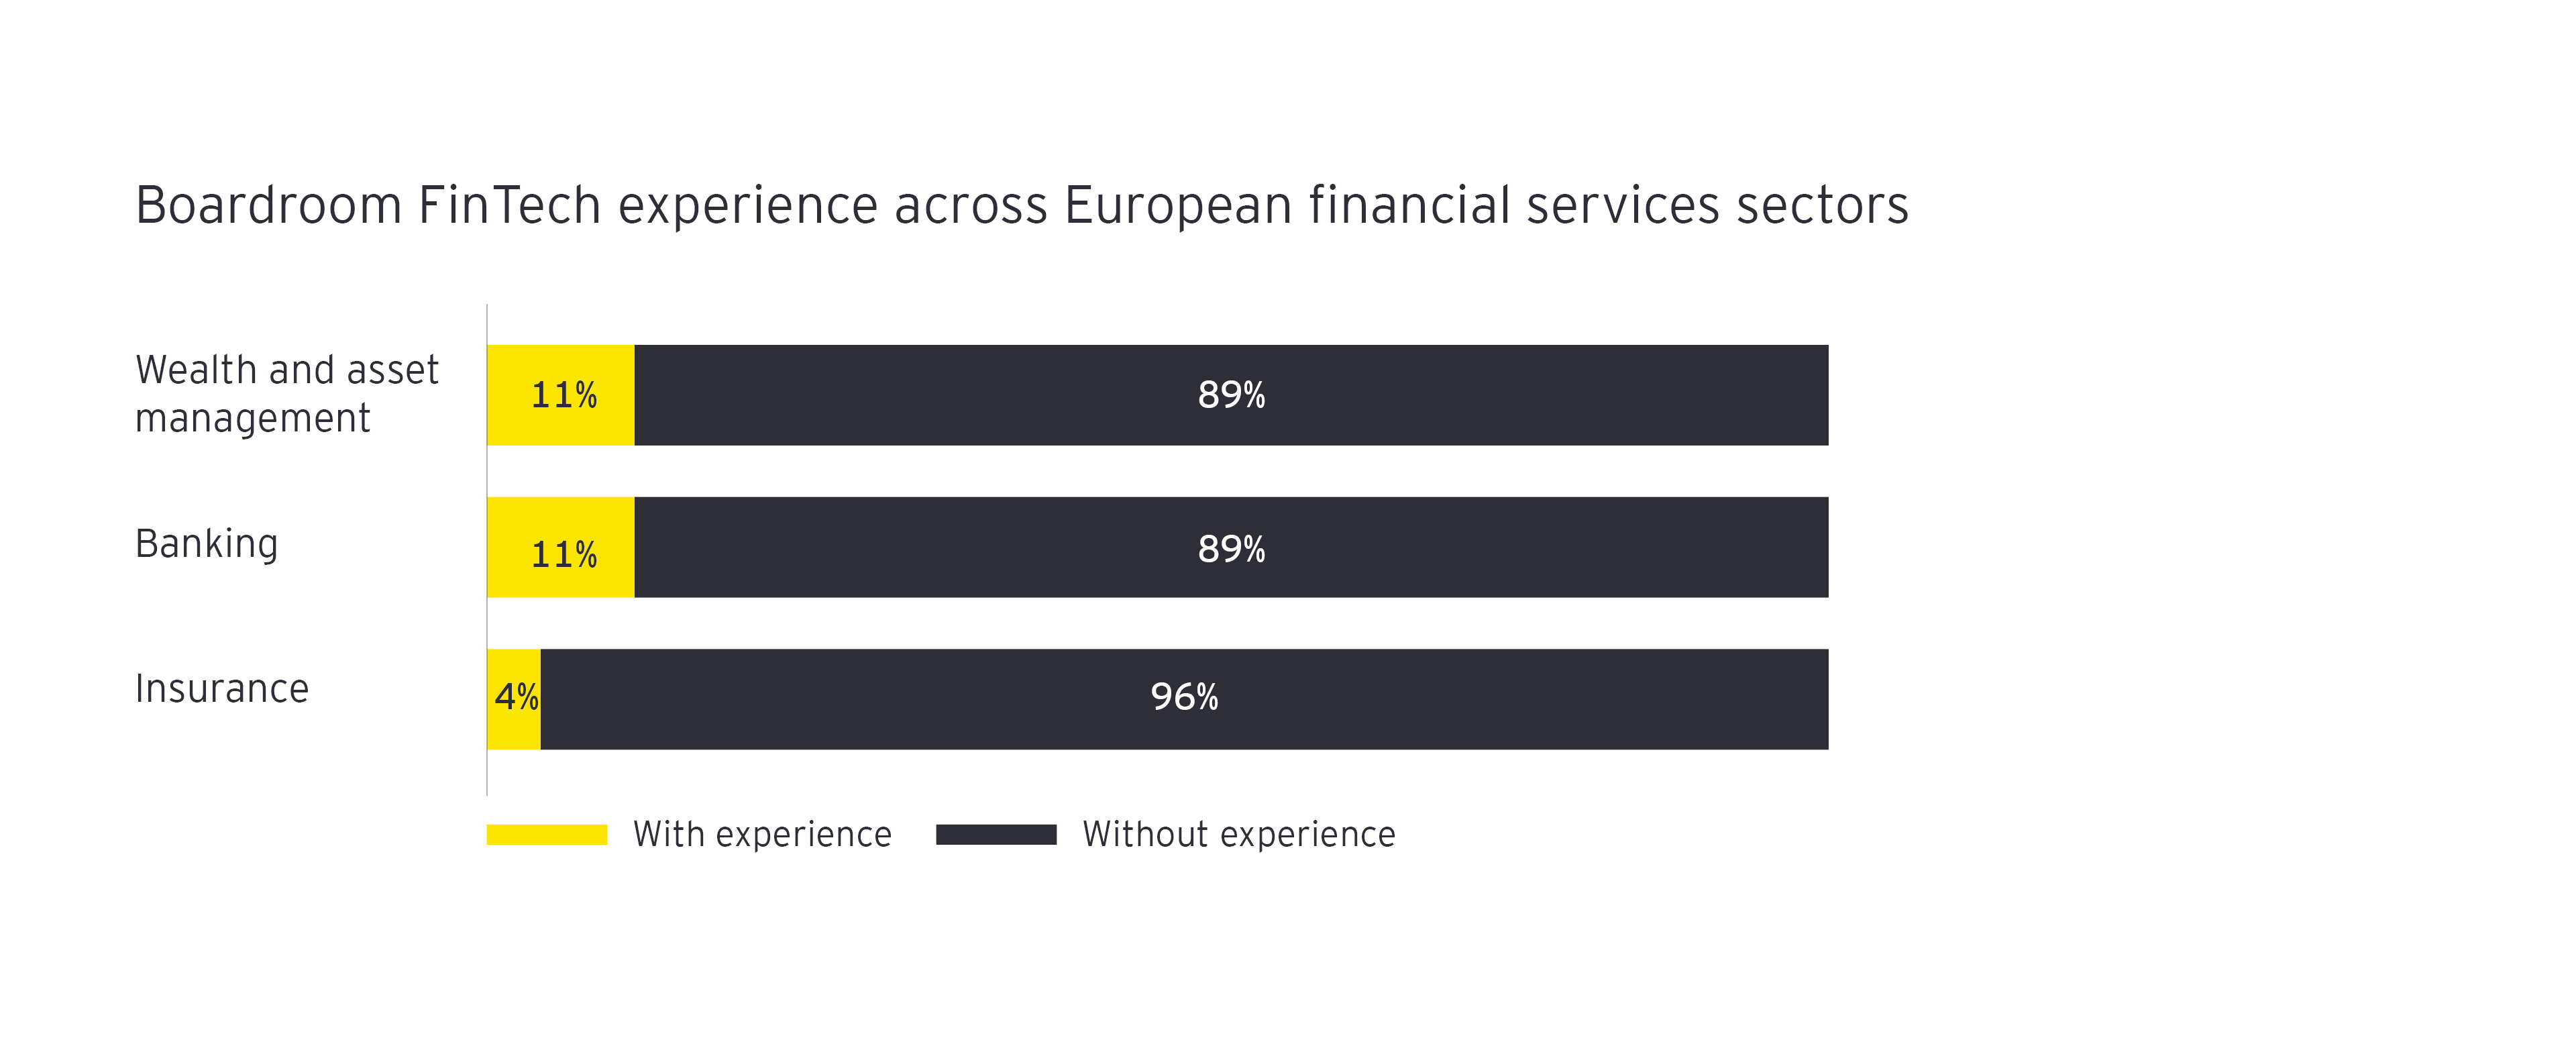 Boardroom FinTech experience across European financial services sectors